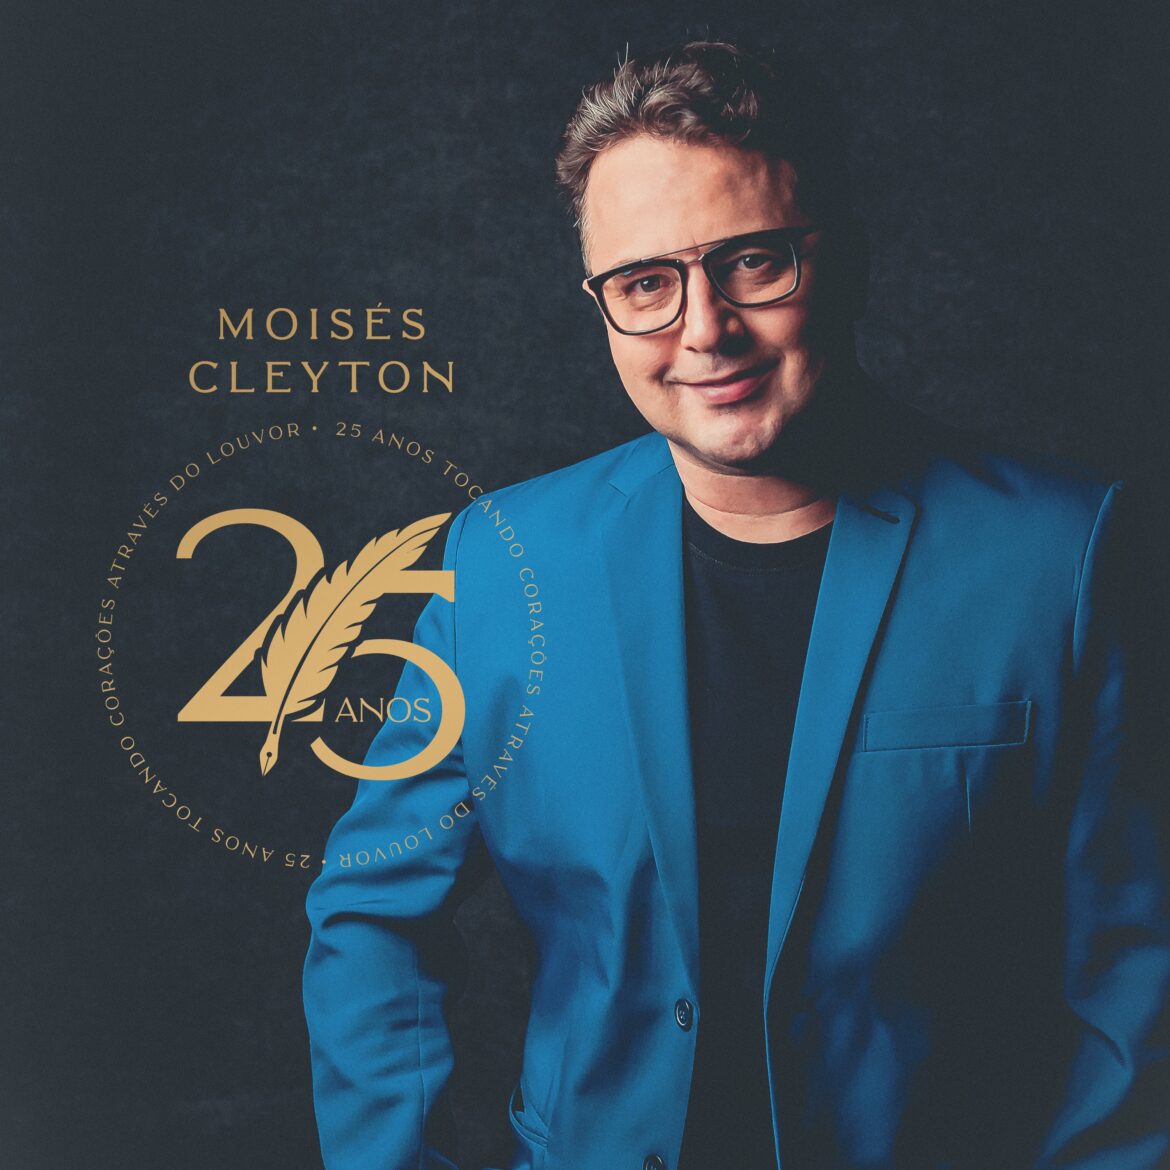 Moisés Cleyton lança álbum que celebra os seus 25 anos de carreira